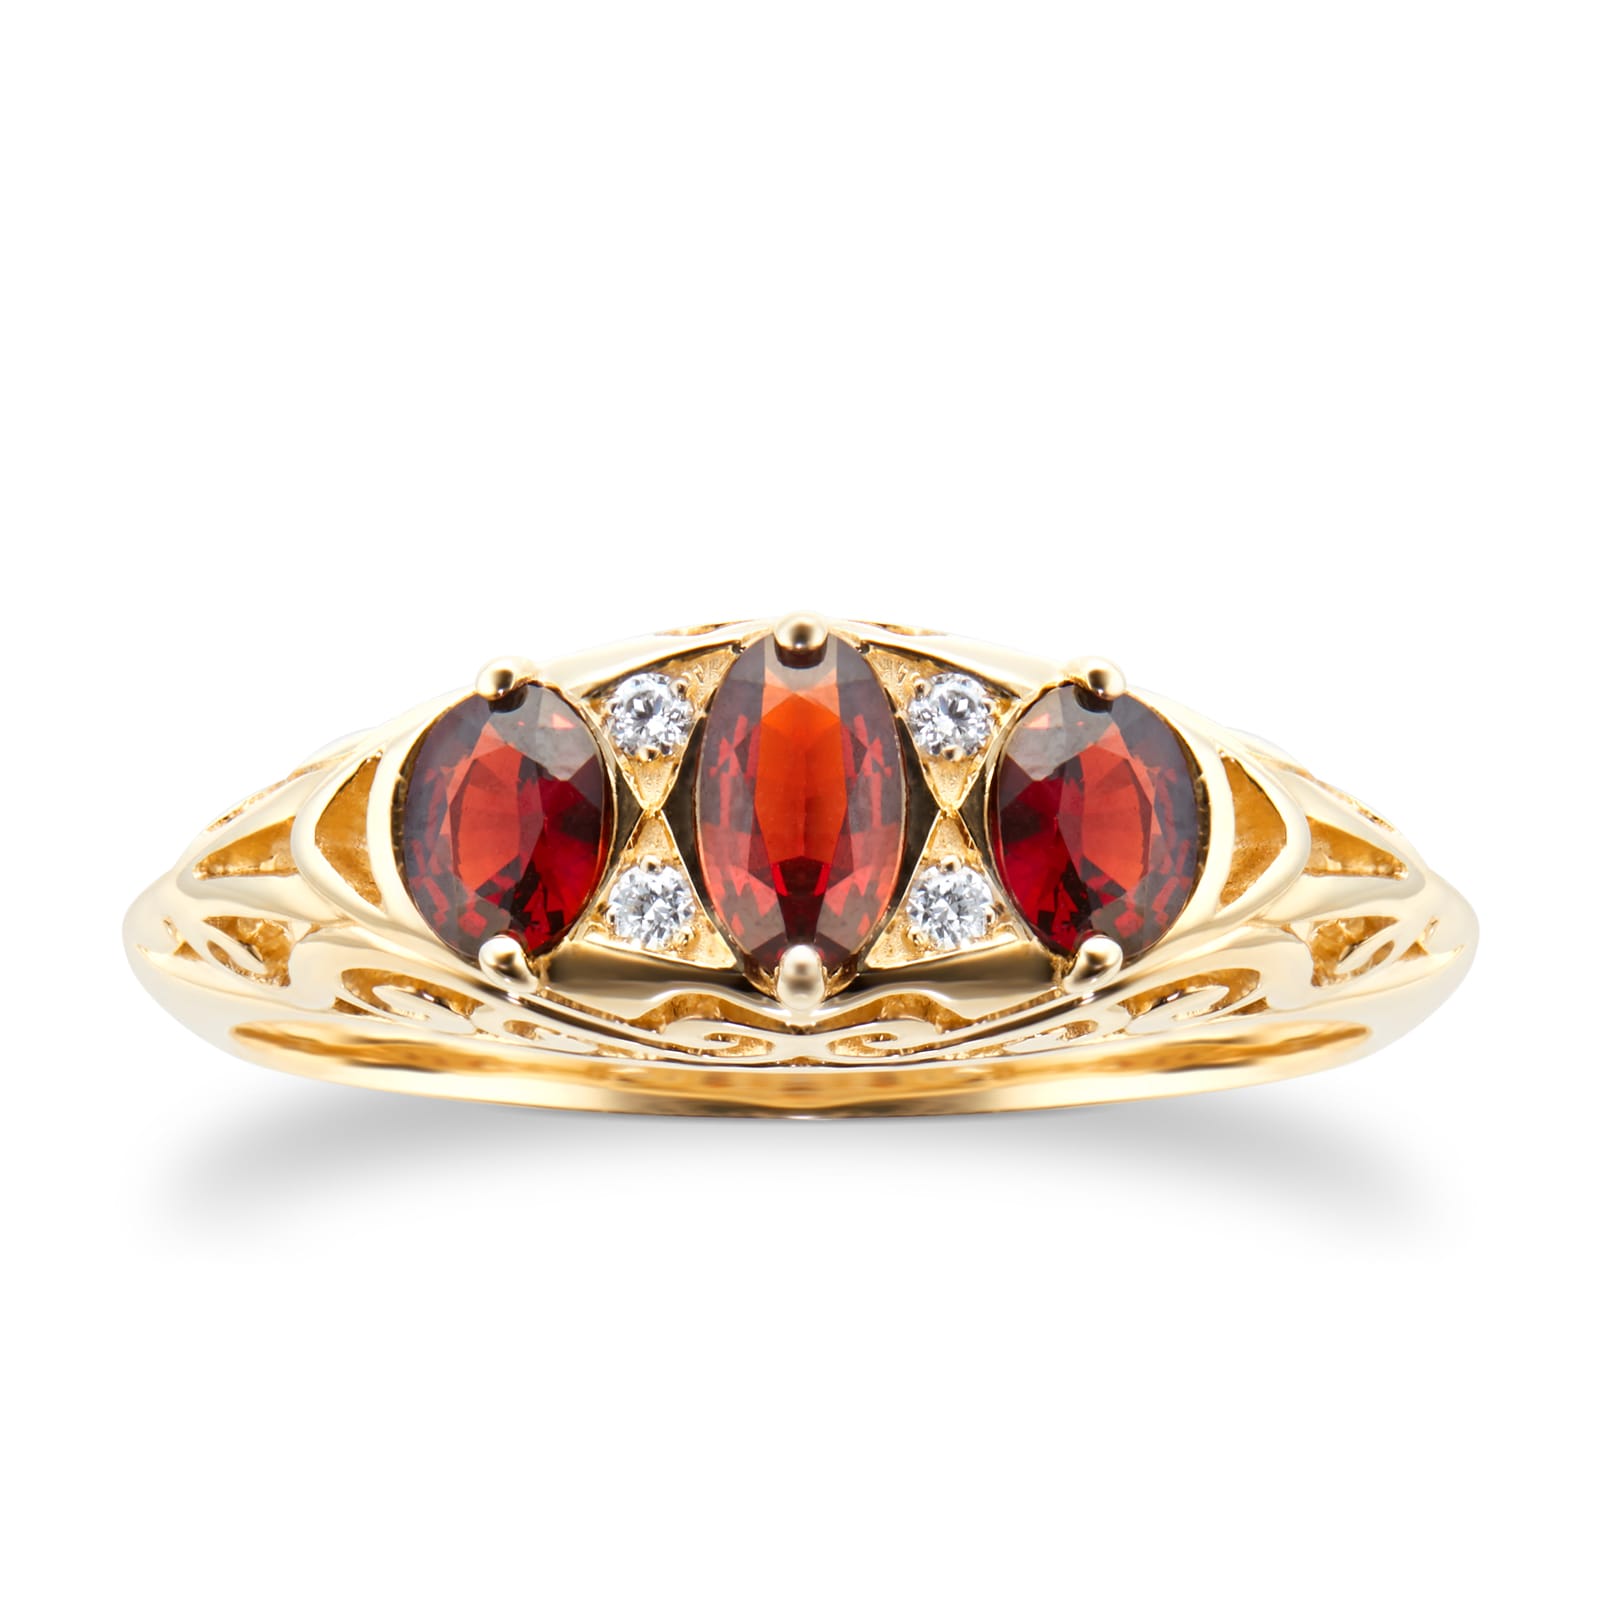 9ct Yellow Gold Victorian Style 3 Stone Garnet & Diamond Ring - Ring Size L